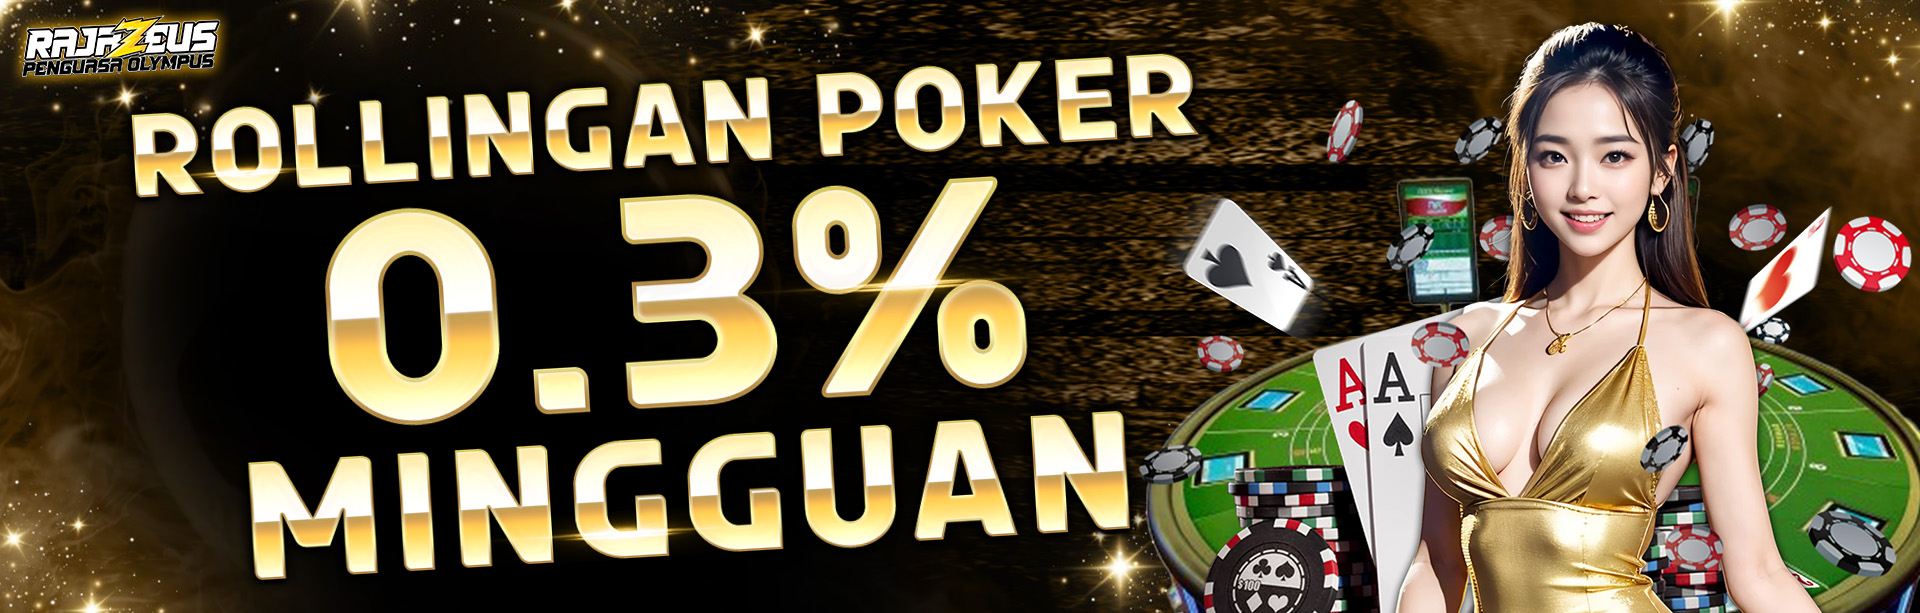 Rollingan Poker 0.3% Mingguan